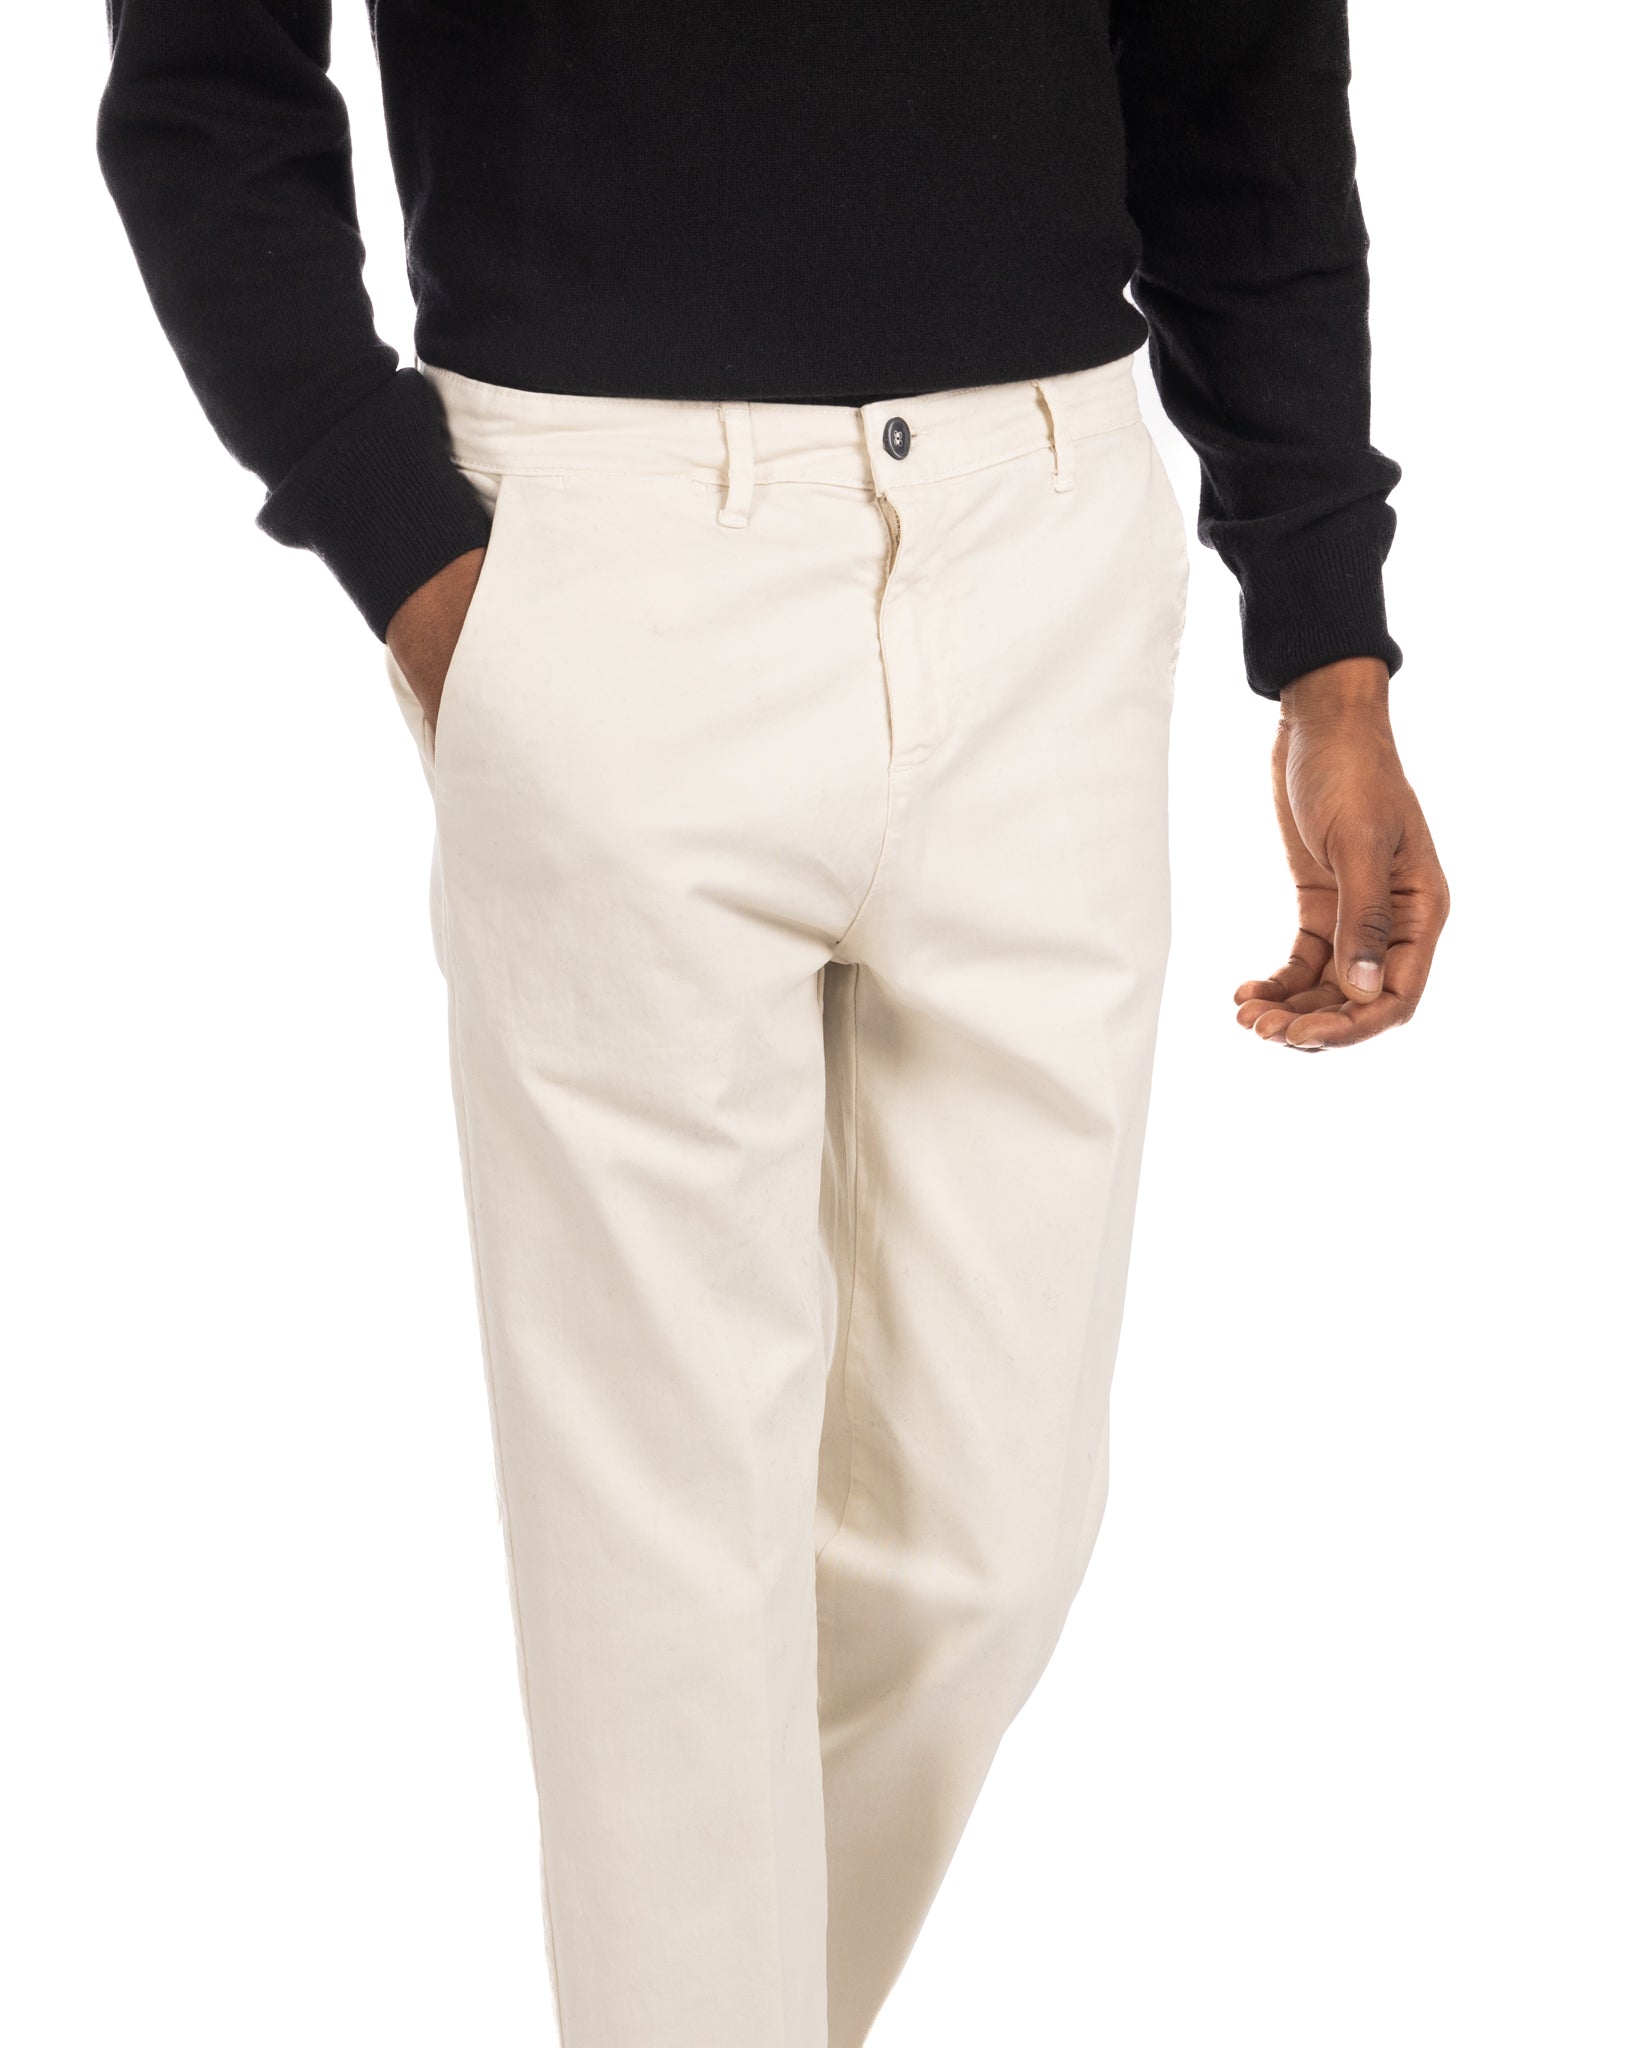 Sorrento - cream wide bottom trousers